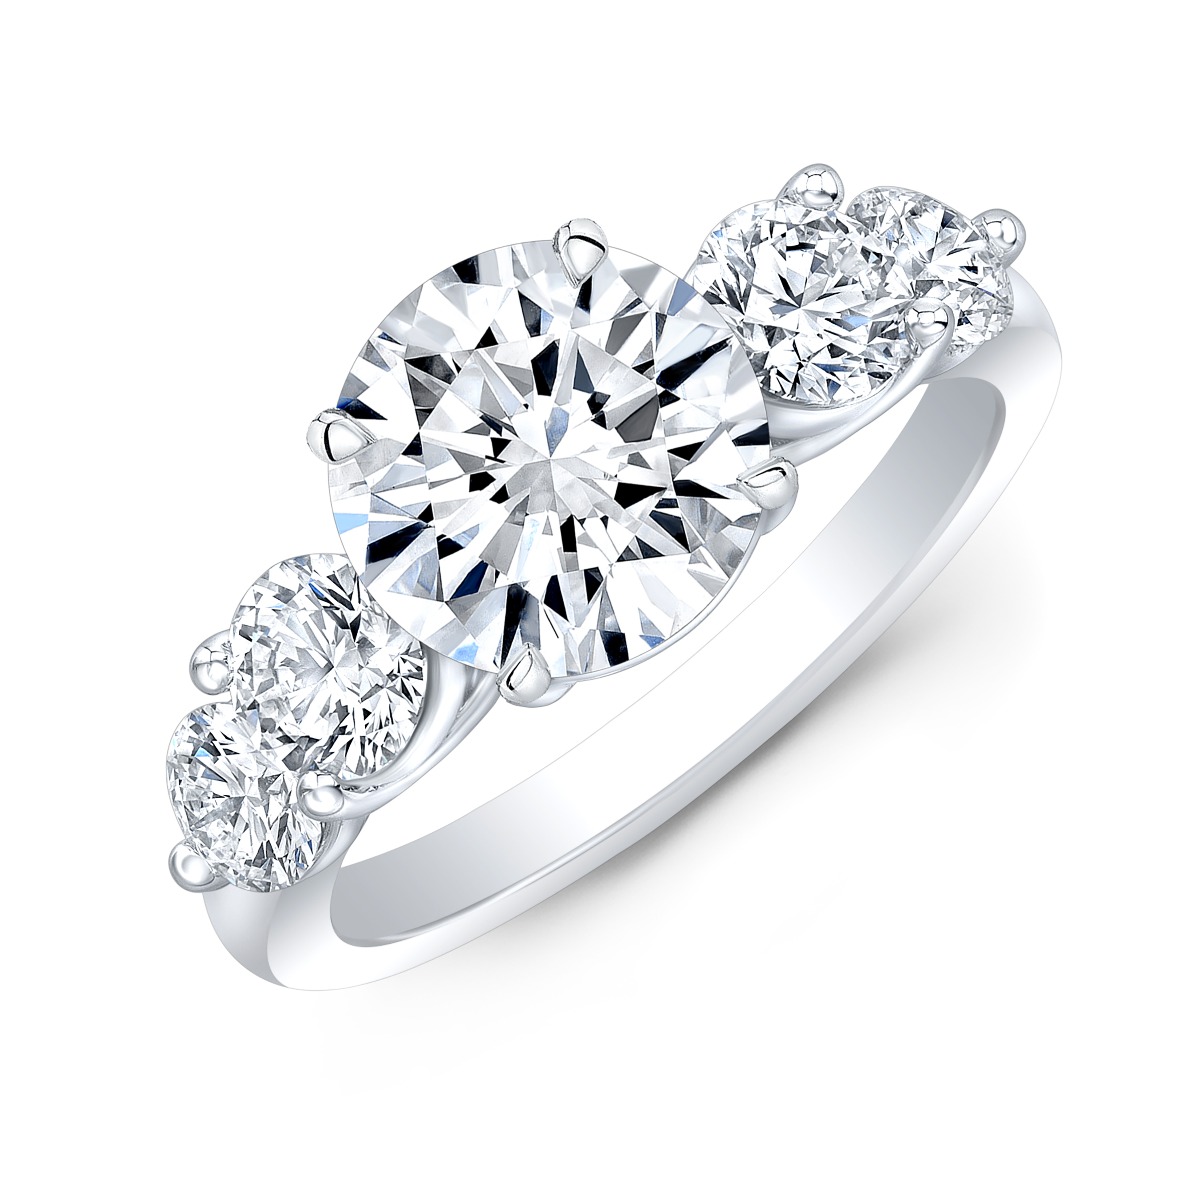 Antique Style 5 Stone Diamond Wedding Ring, RG-2420d